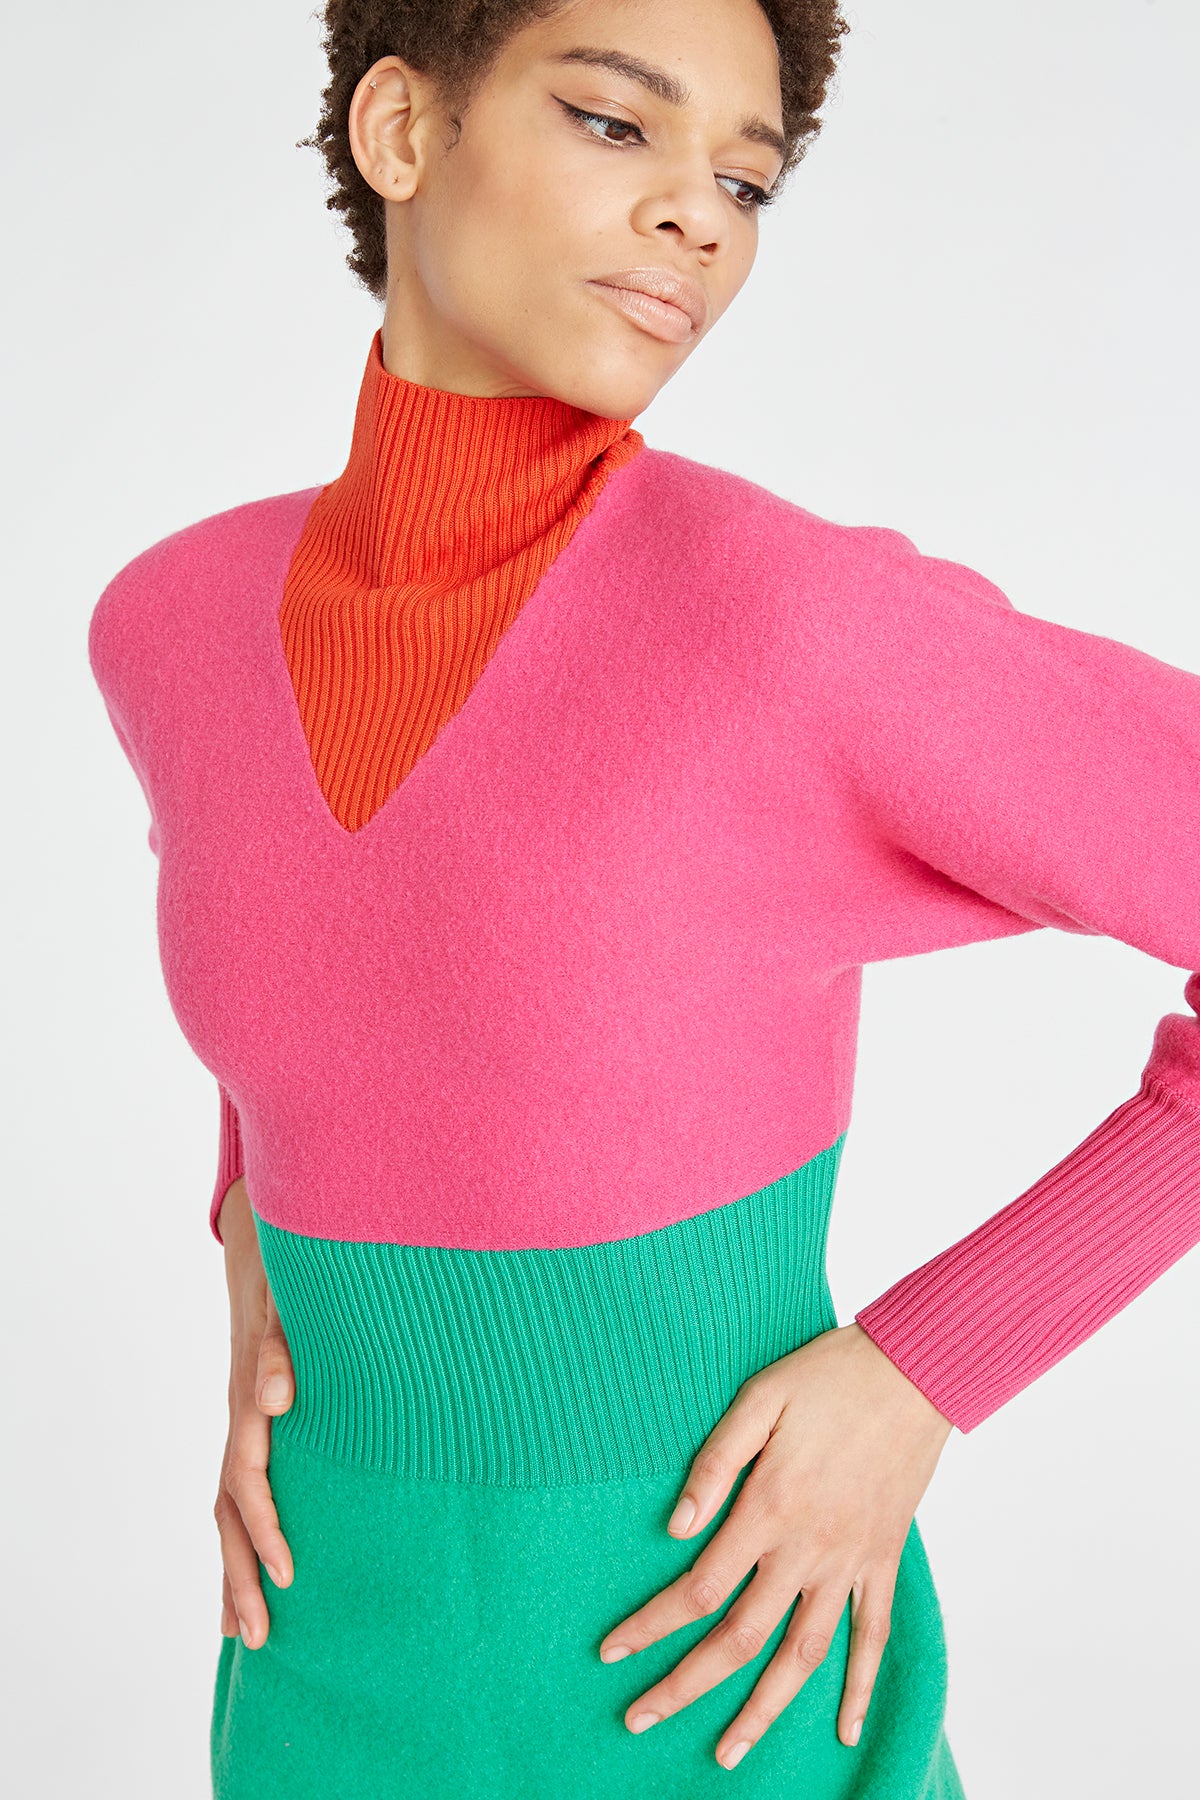 Akila Sweater Dress